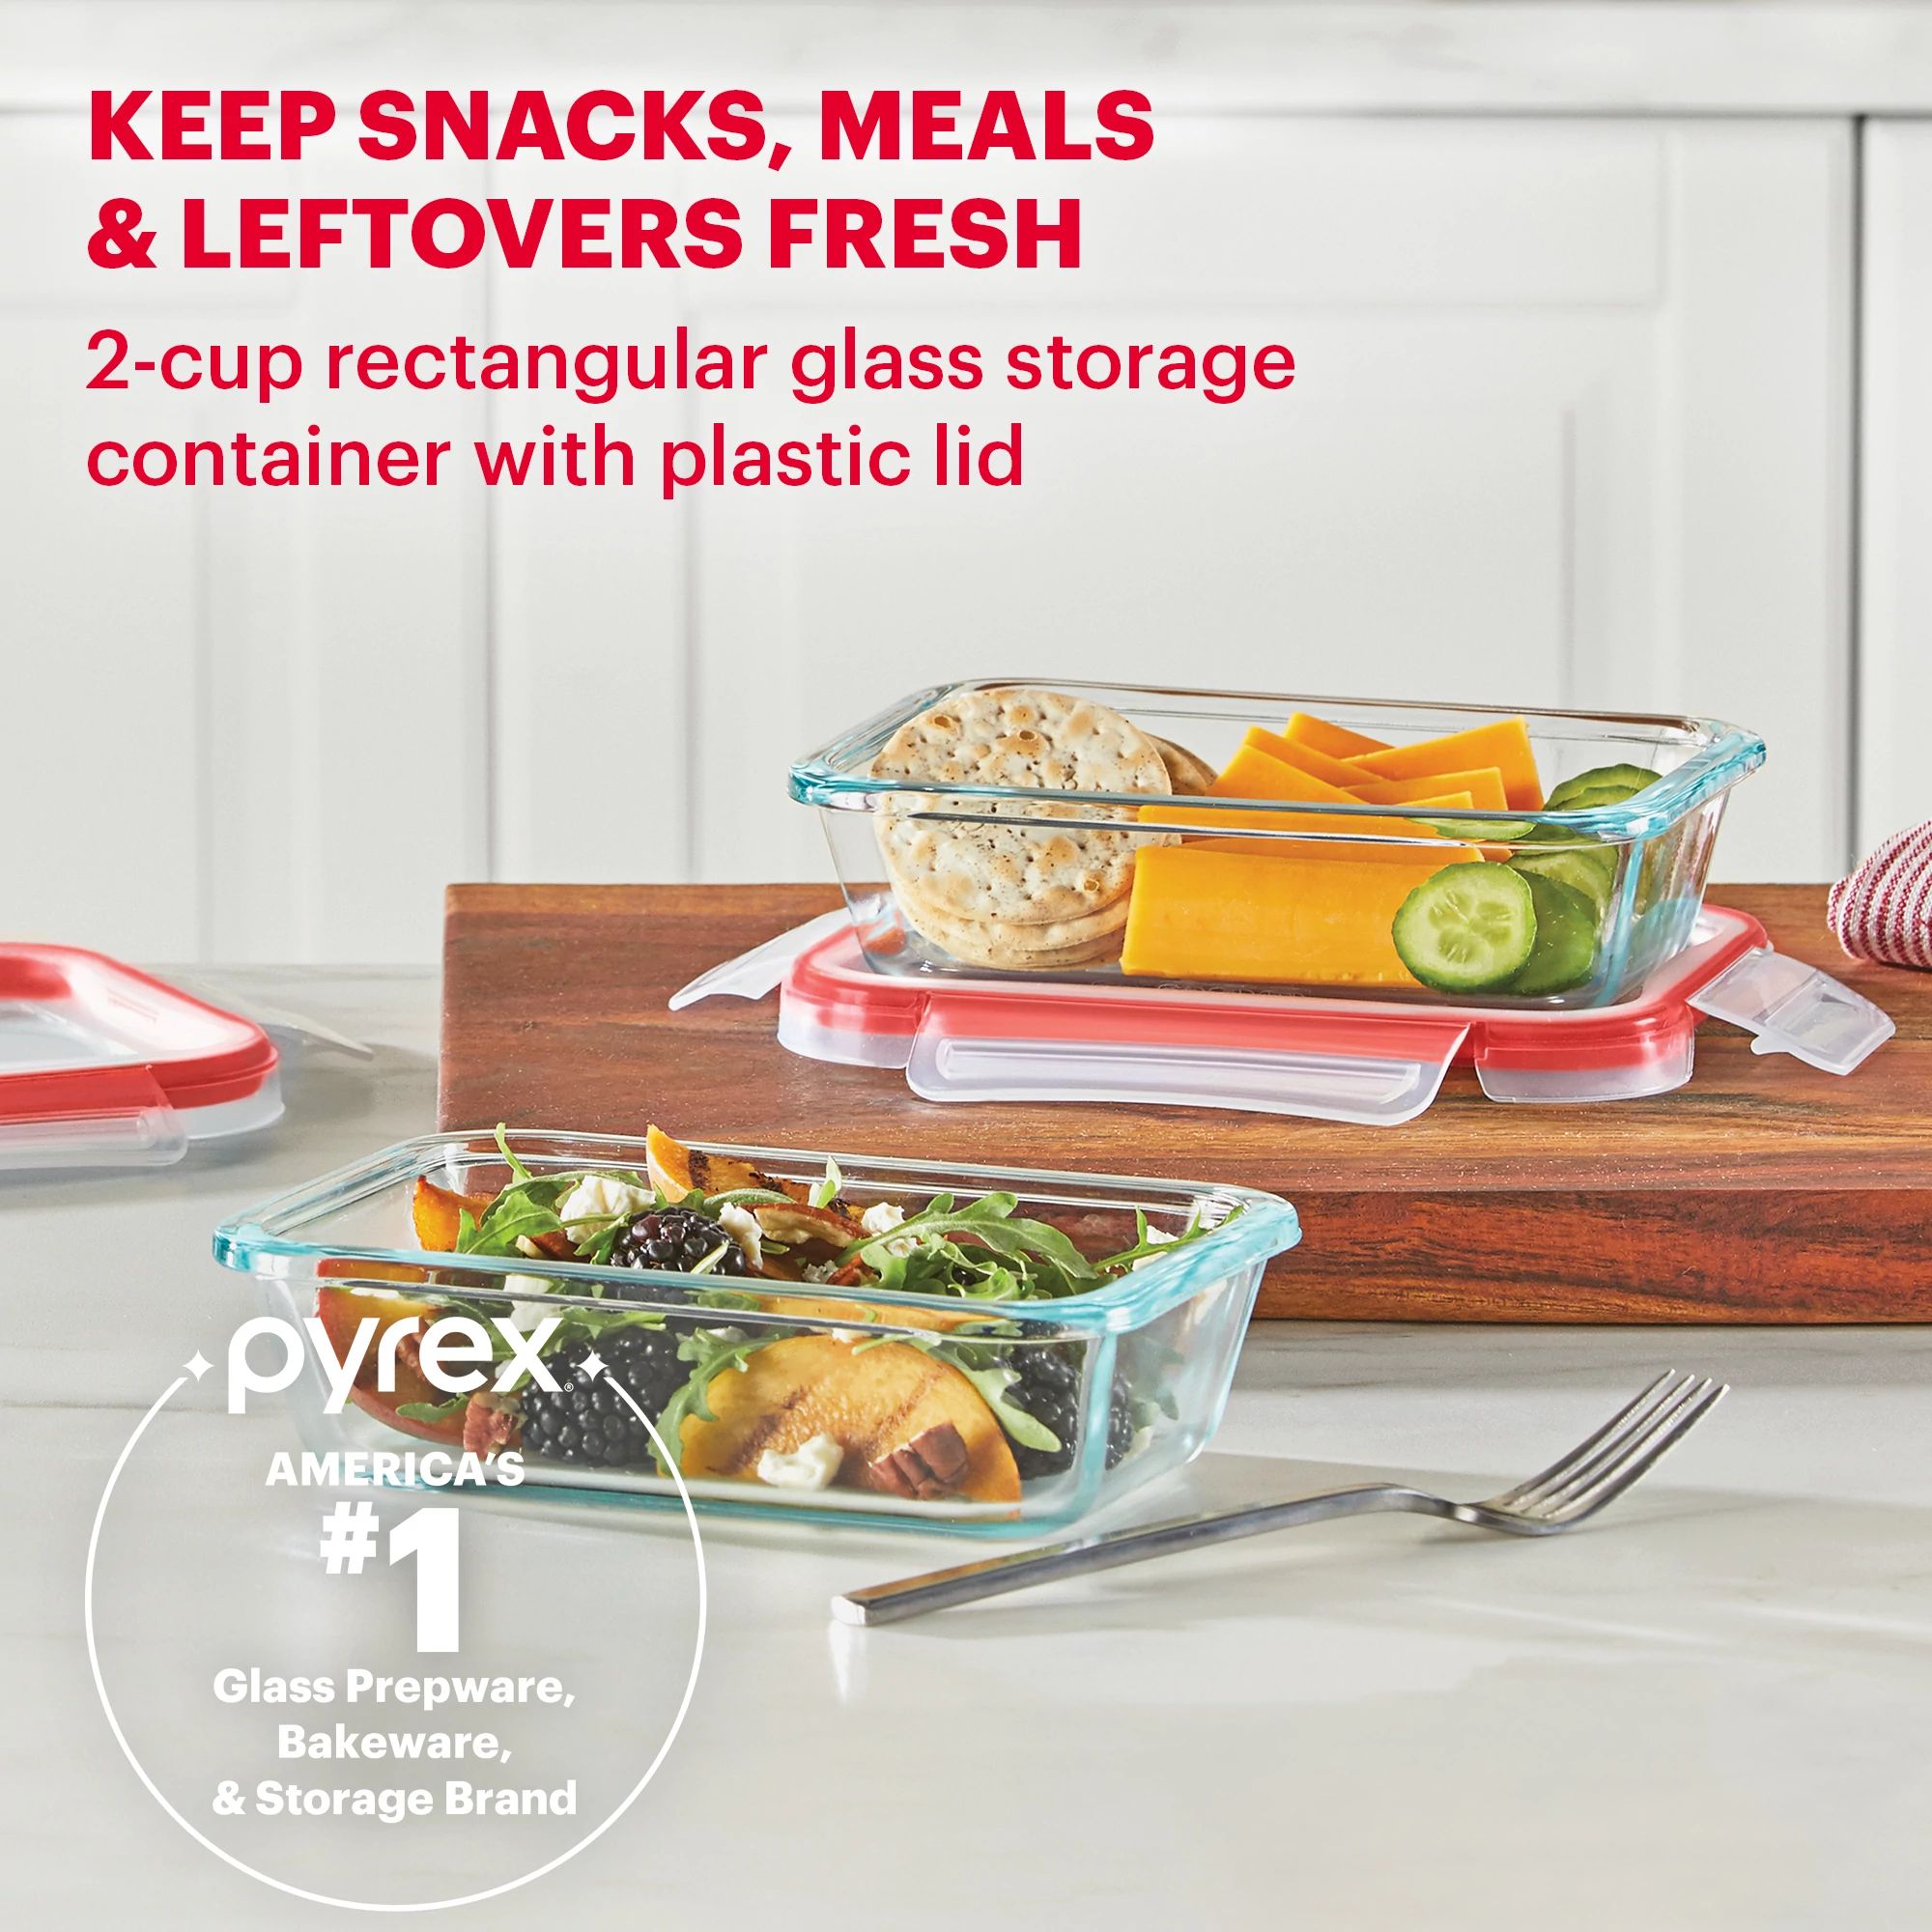 Pyrex MealBox 5.5 Cup Rectangular Glass Food Storage